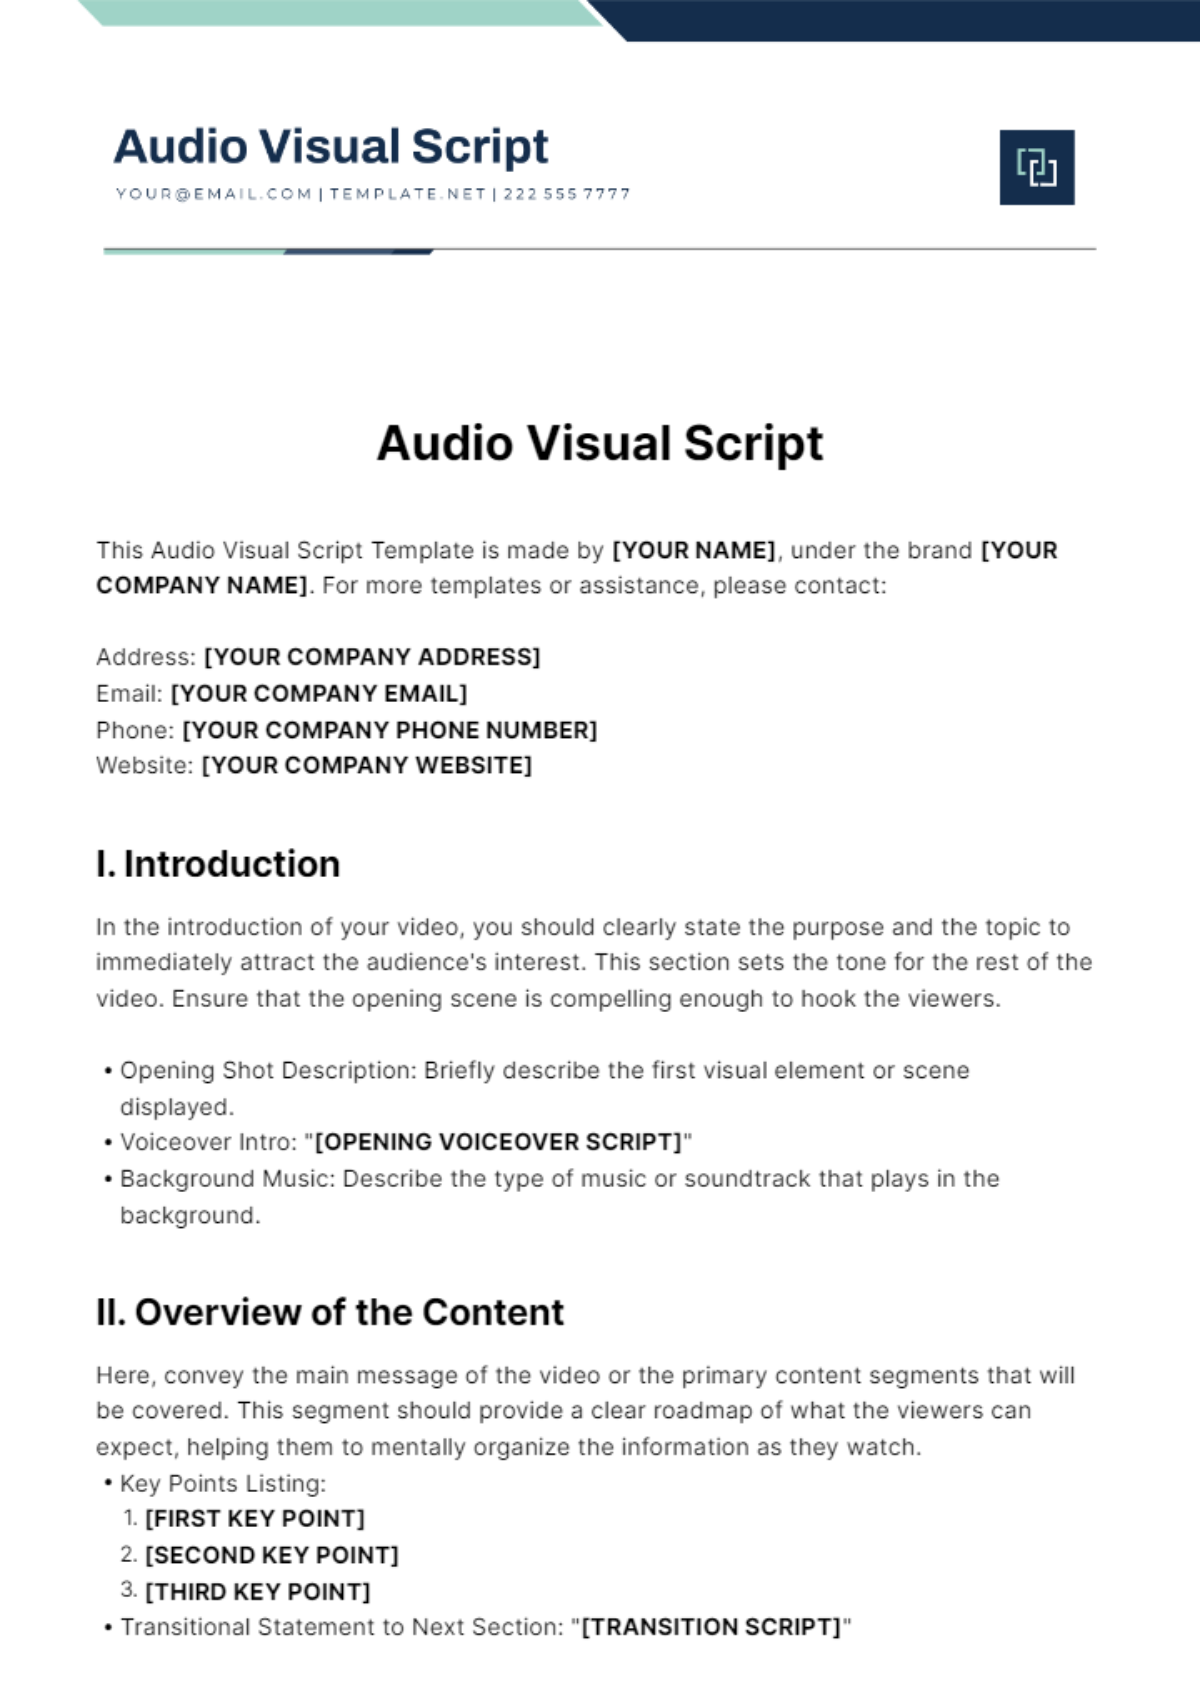 Free Audio Visual Script Template